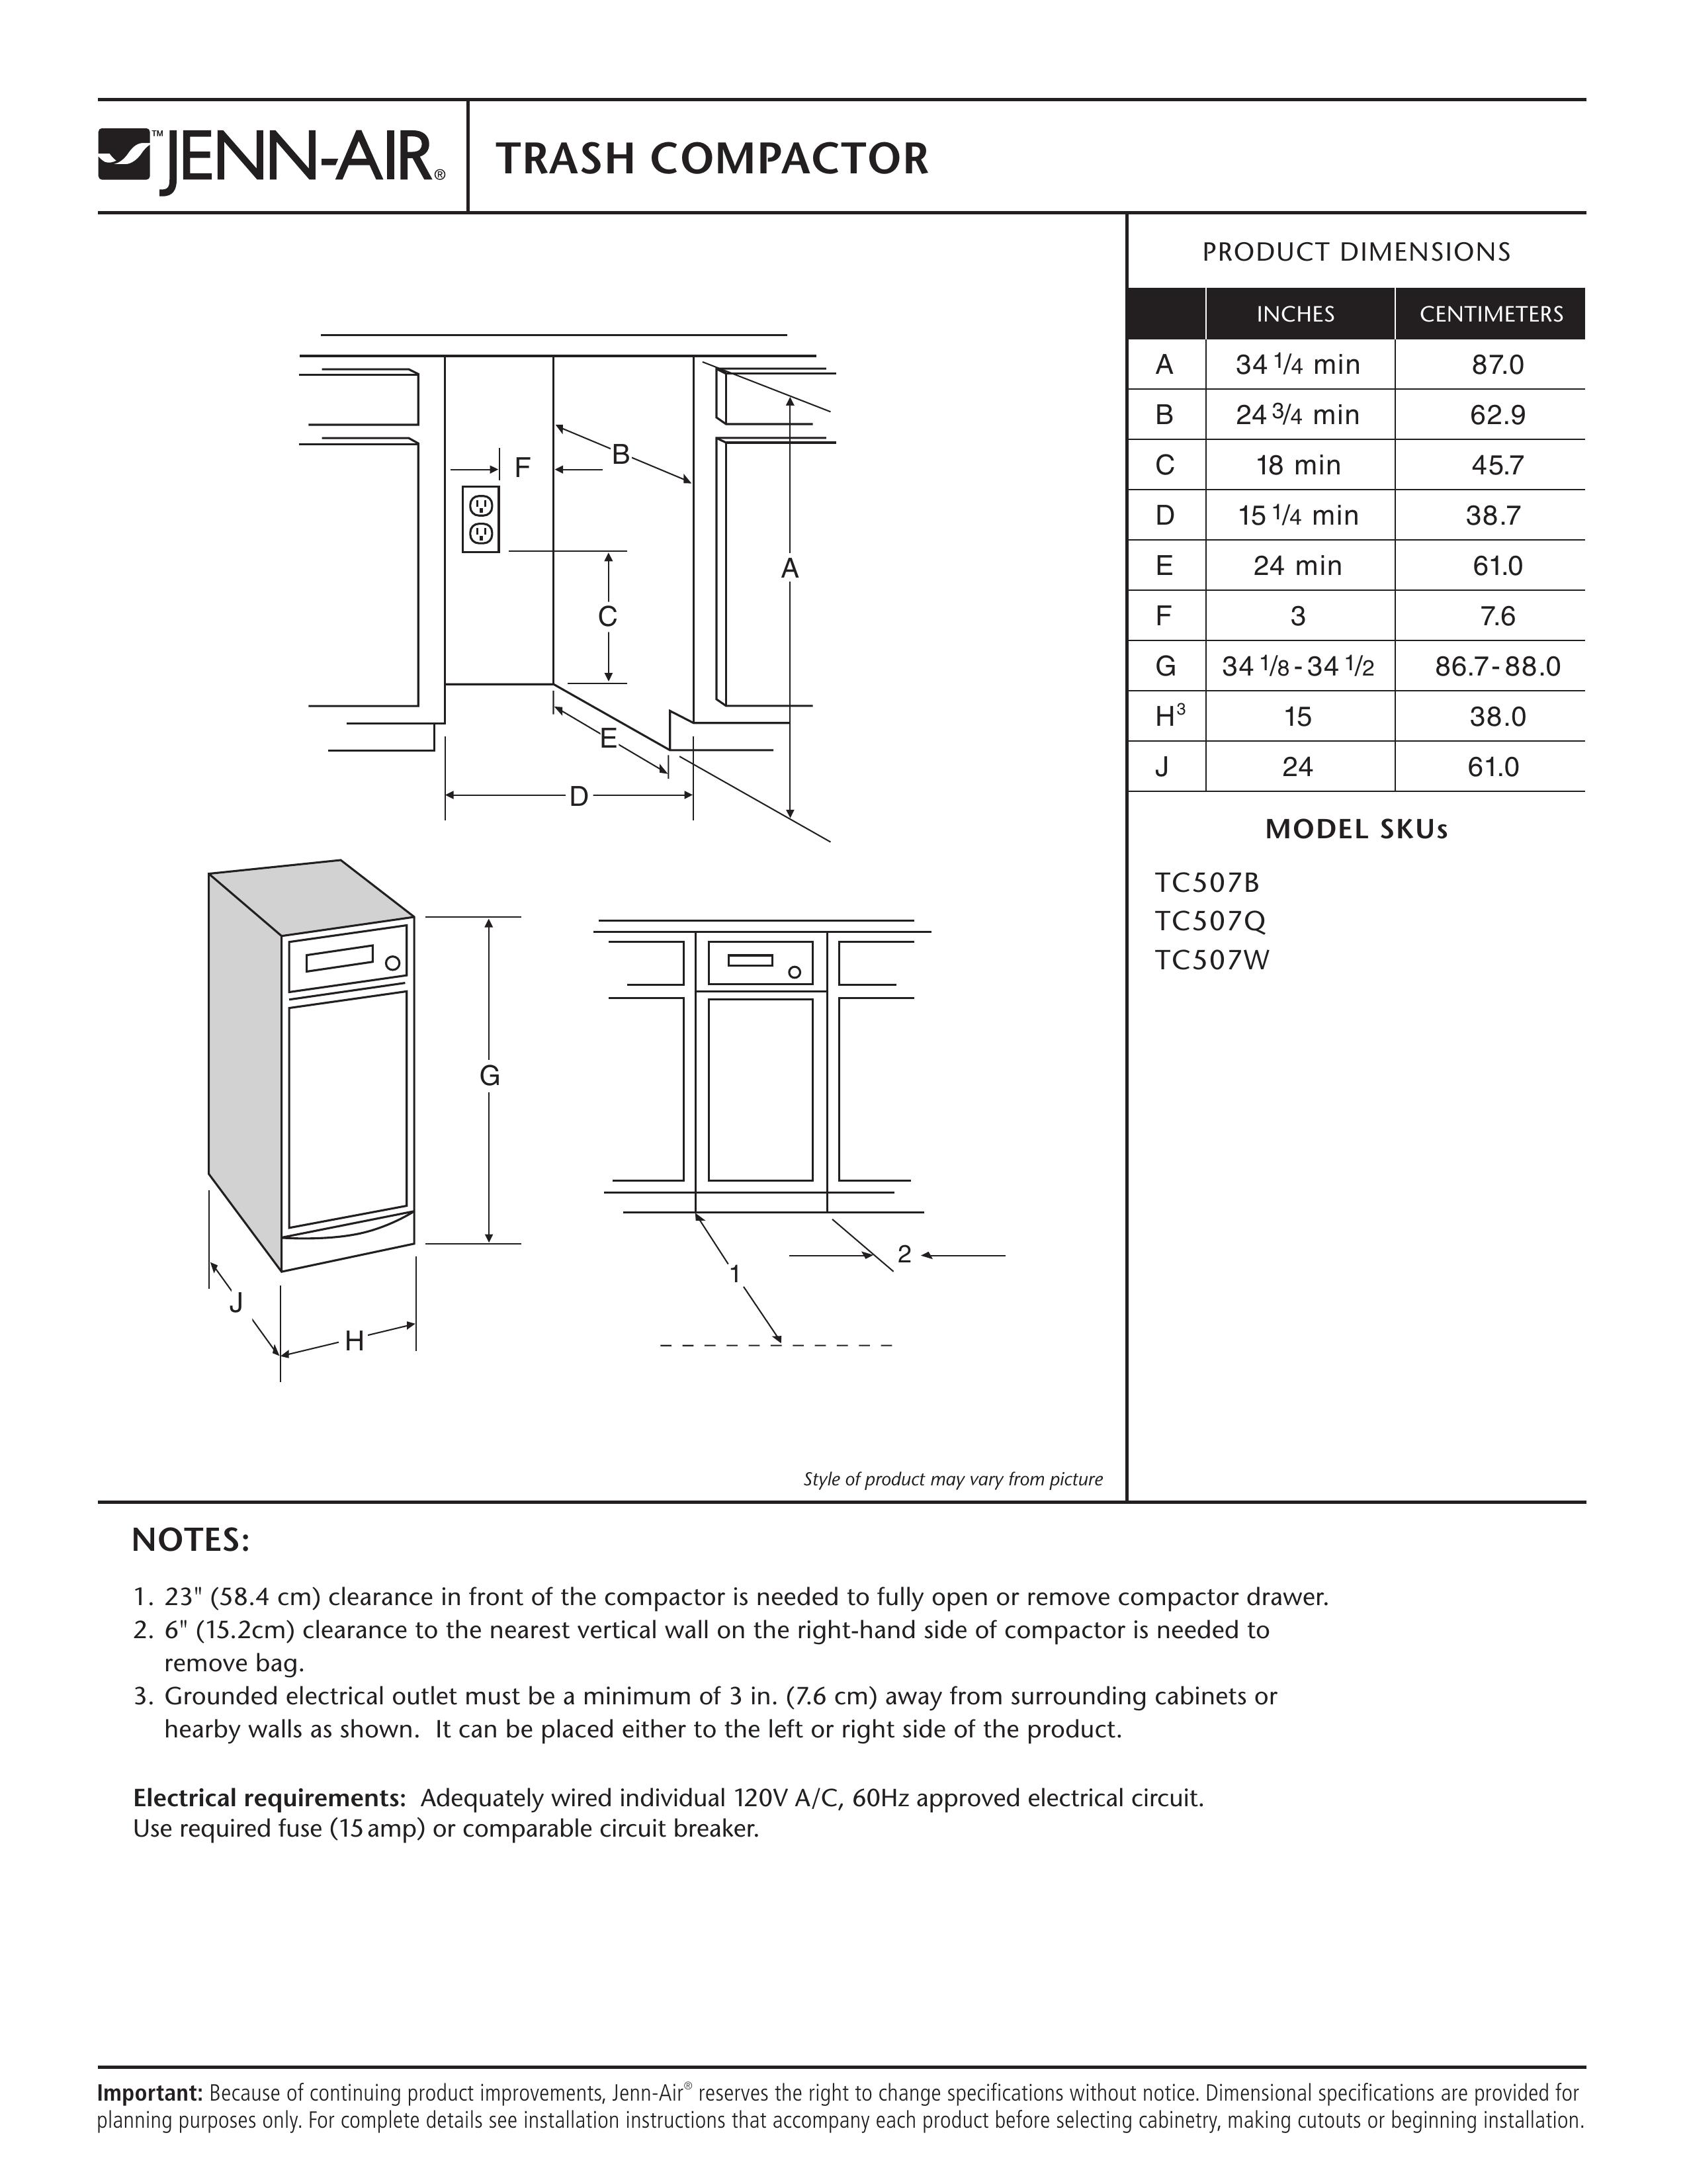 Jenn-Air TC507B Trash Compactor User Manual